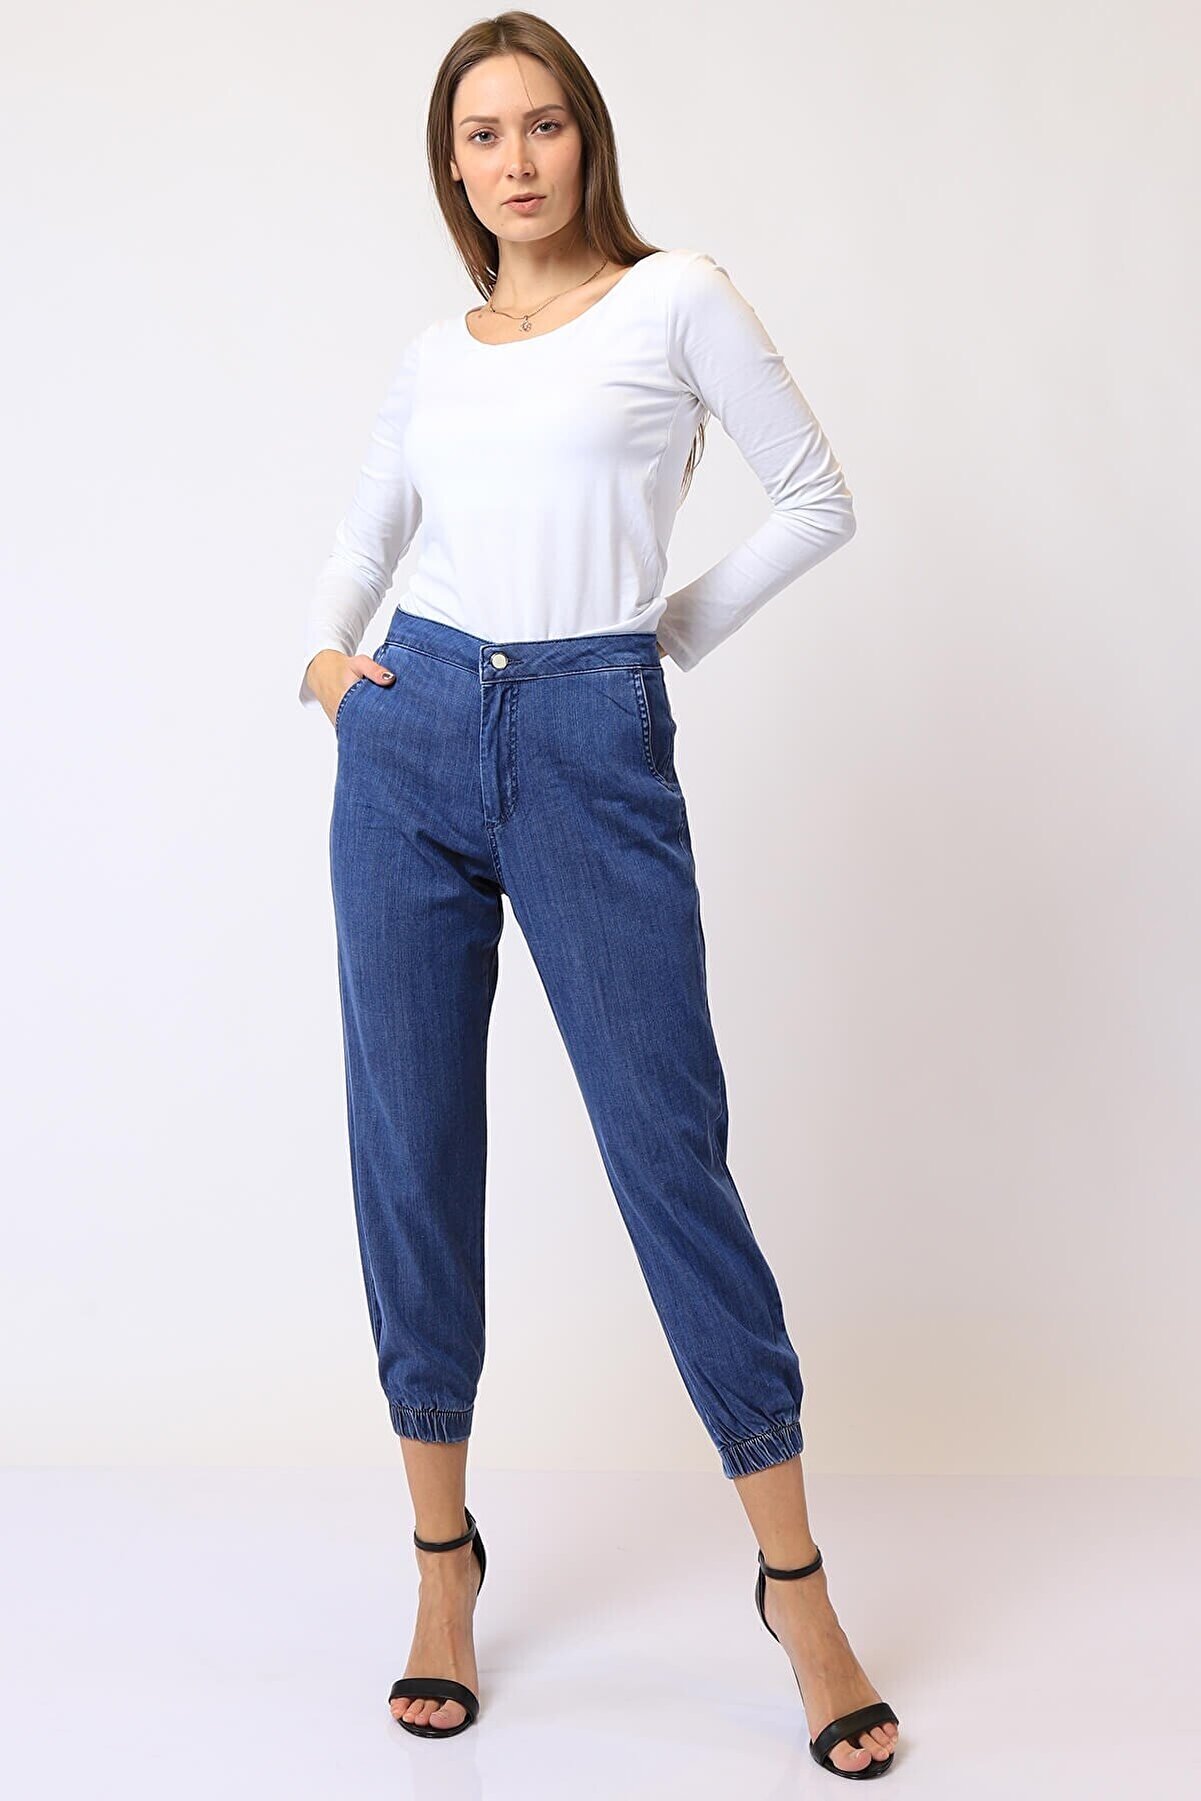 Twister Jeans Kadın Pantolon Sherry 9258-01 (T) 01